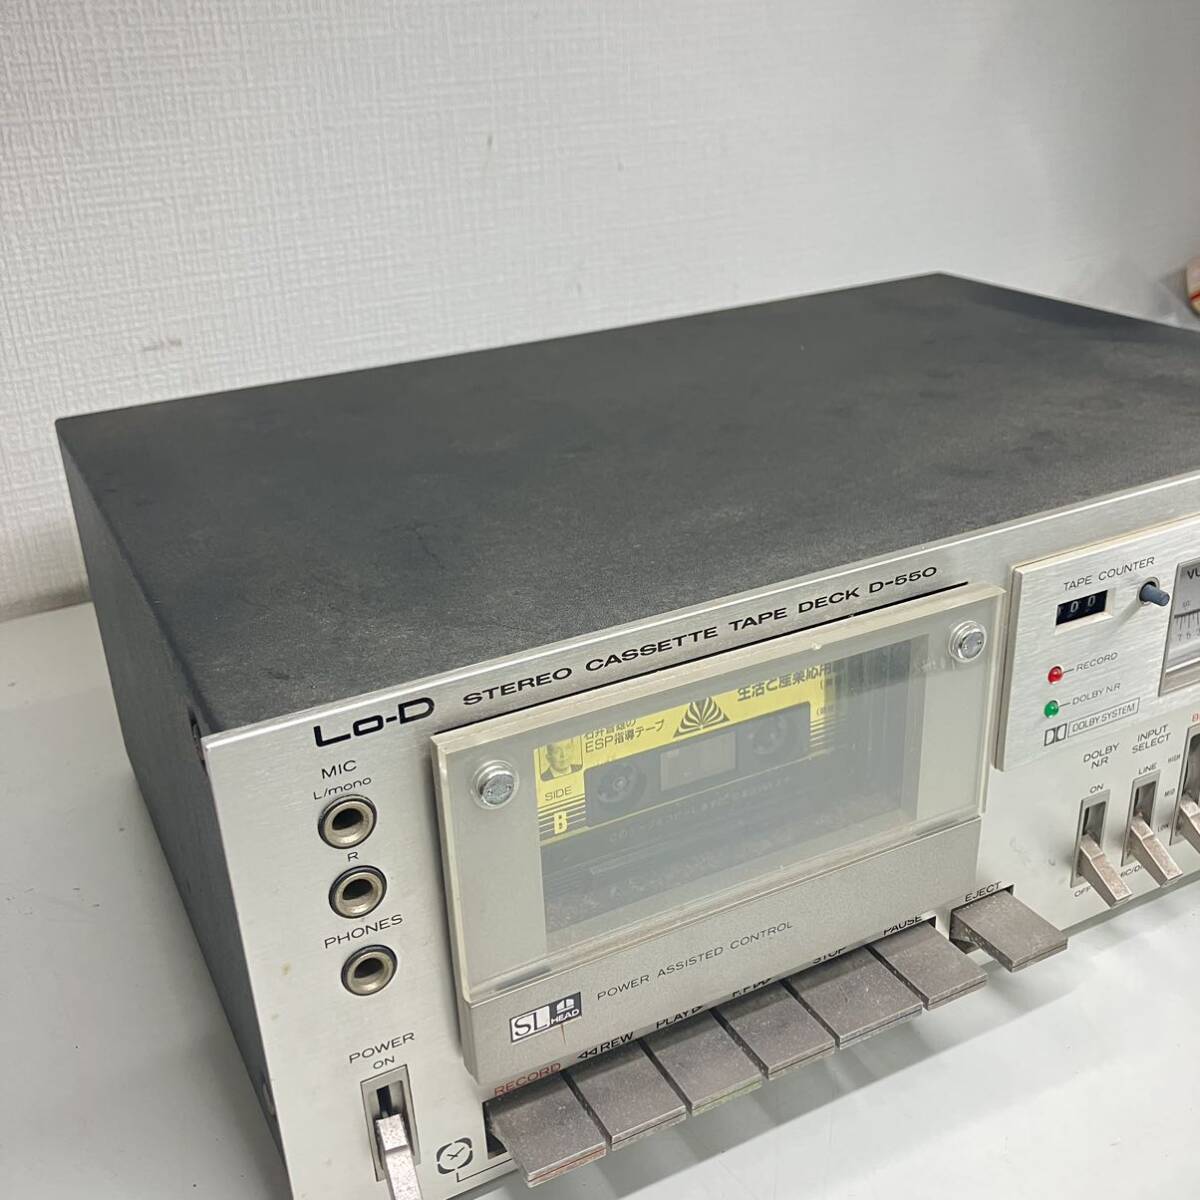 1 jpy ~ 4T Hitachi Lo-D low tiSTEREO CASSETTE DECK D-550 stereo cassette deck sound equipment Hitachi cassette deck electrification has confirmed 